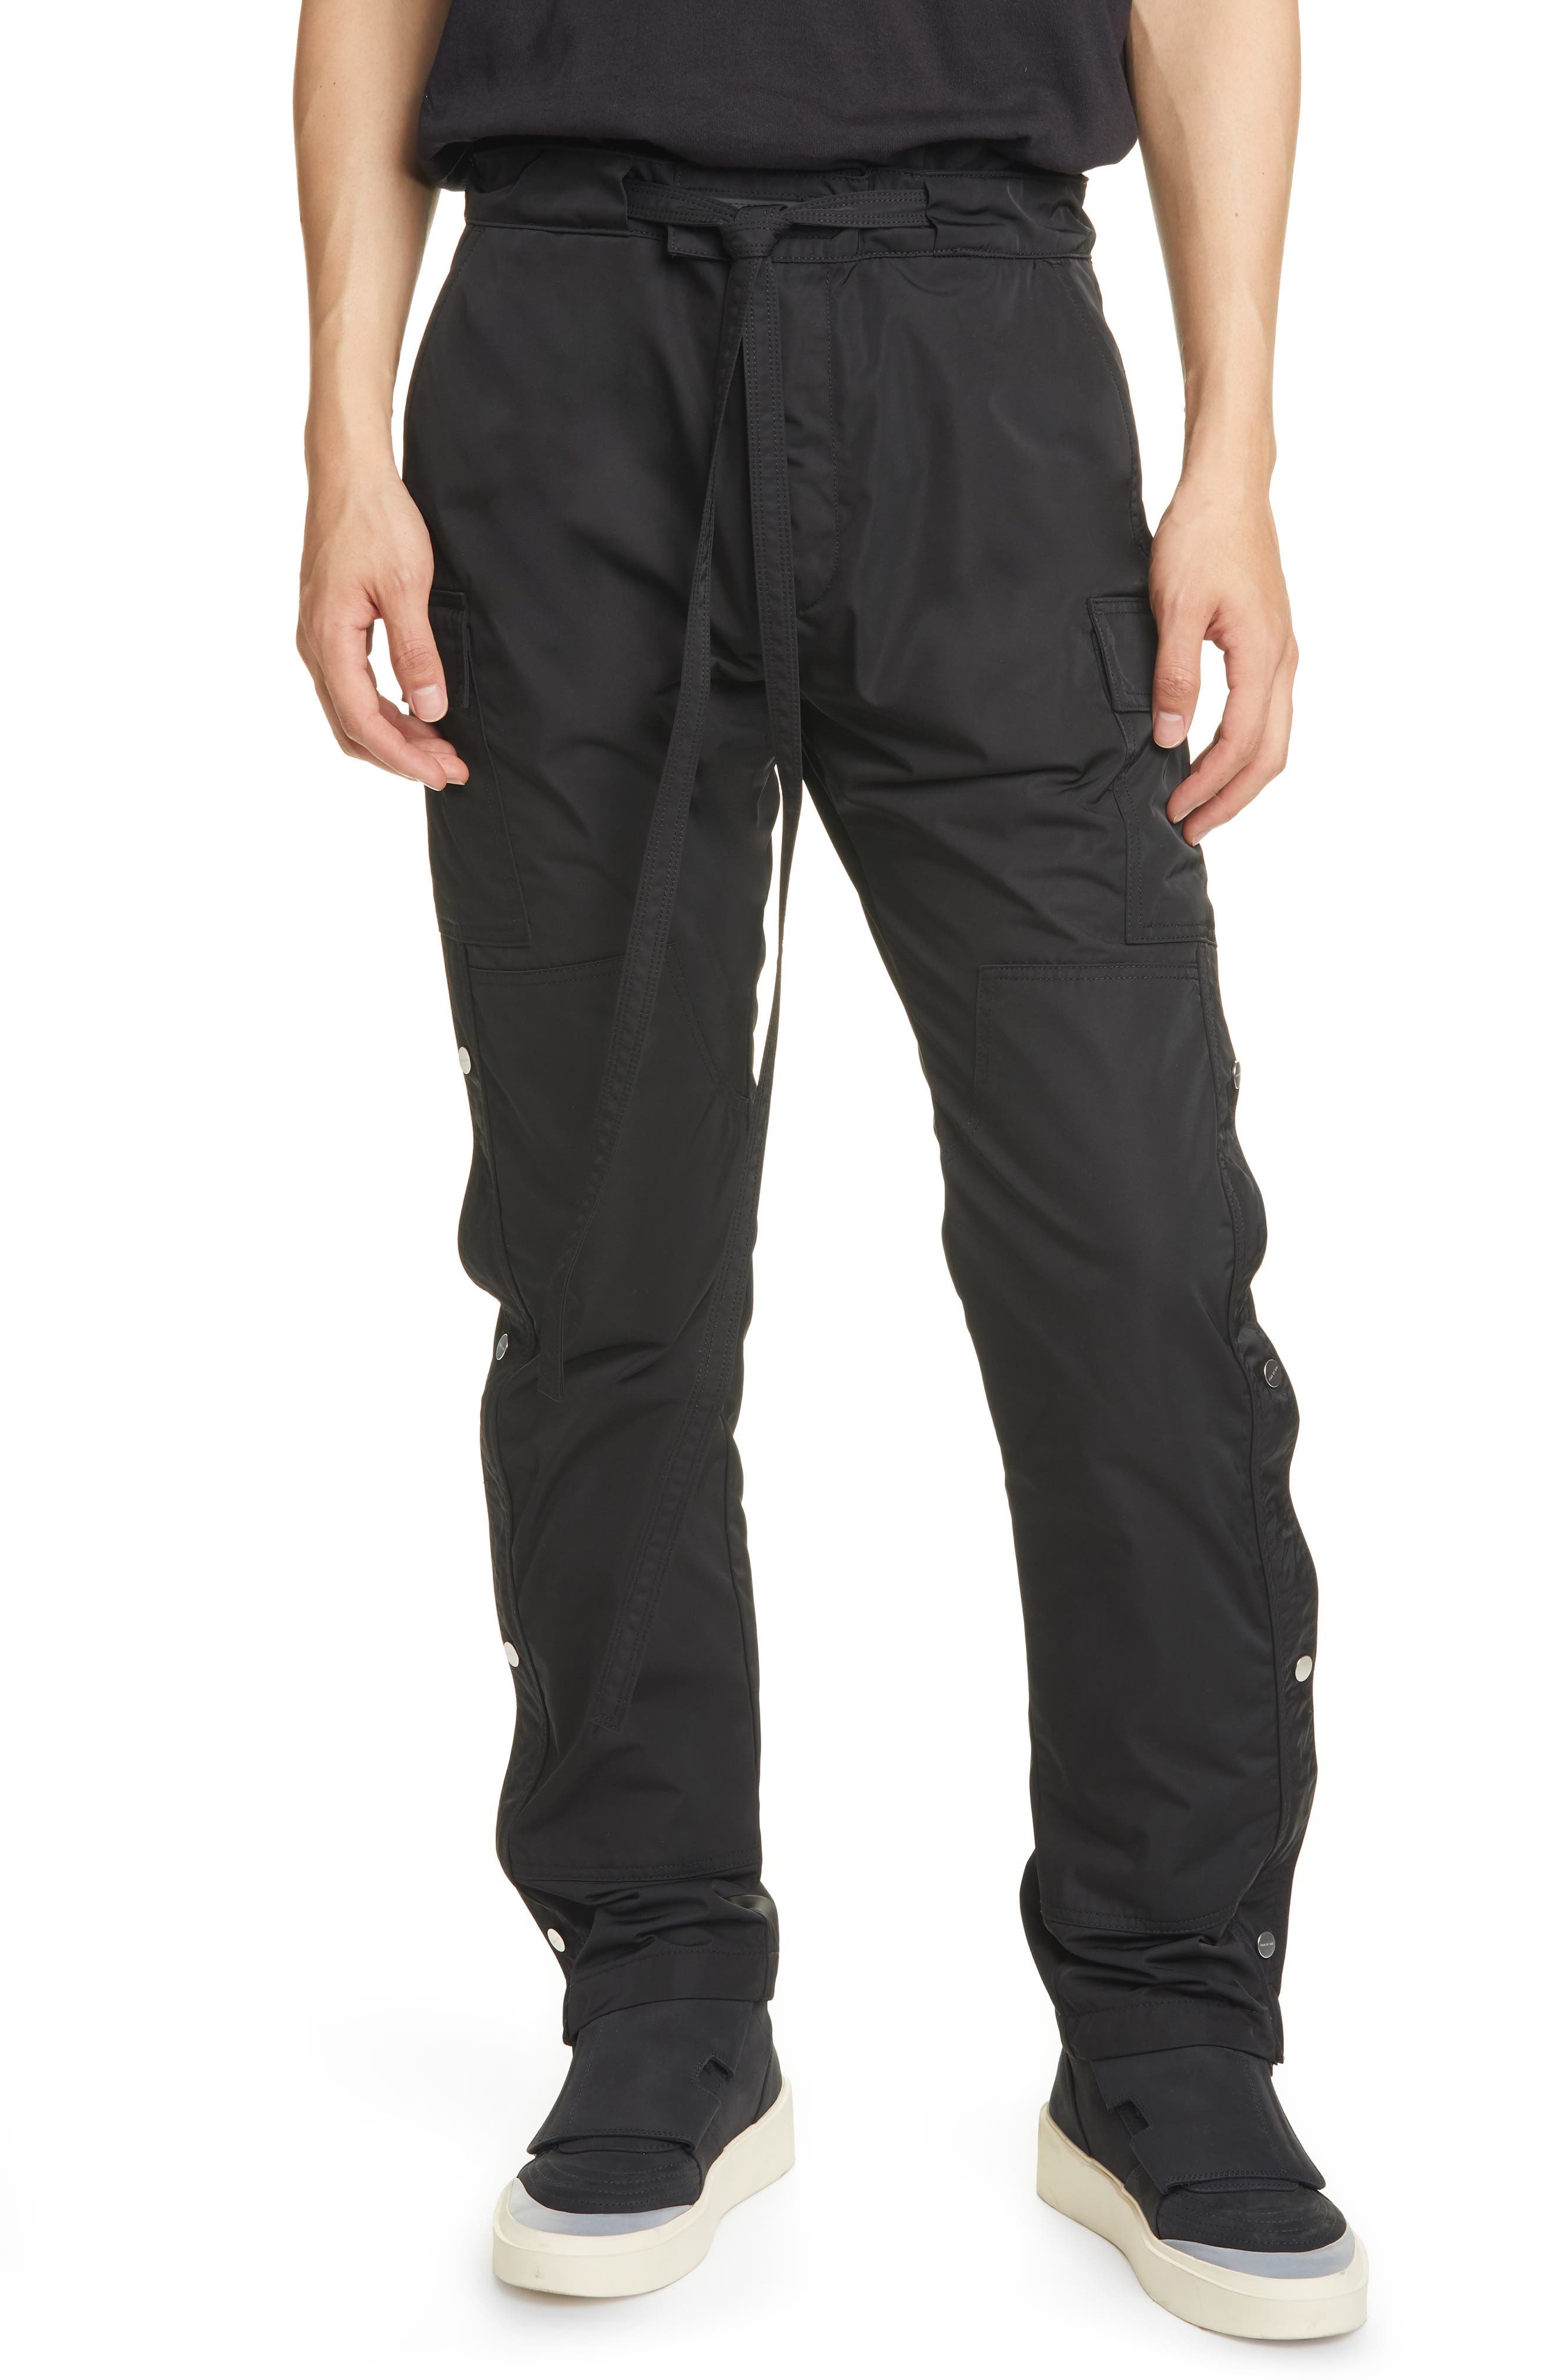 black nylon cargo pants